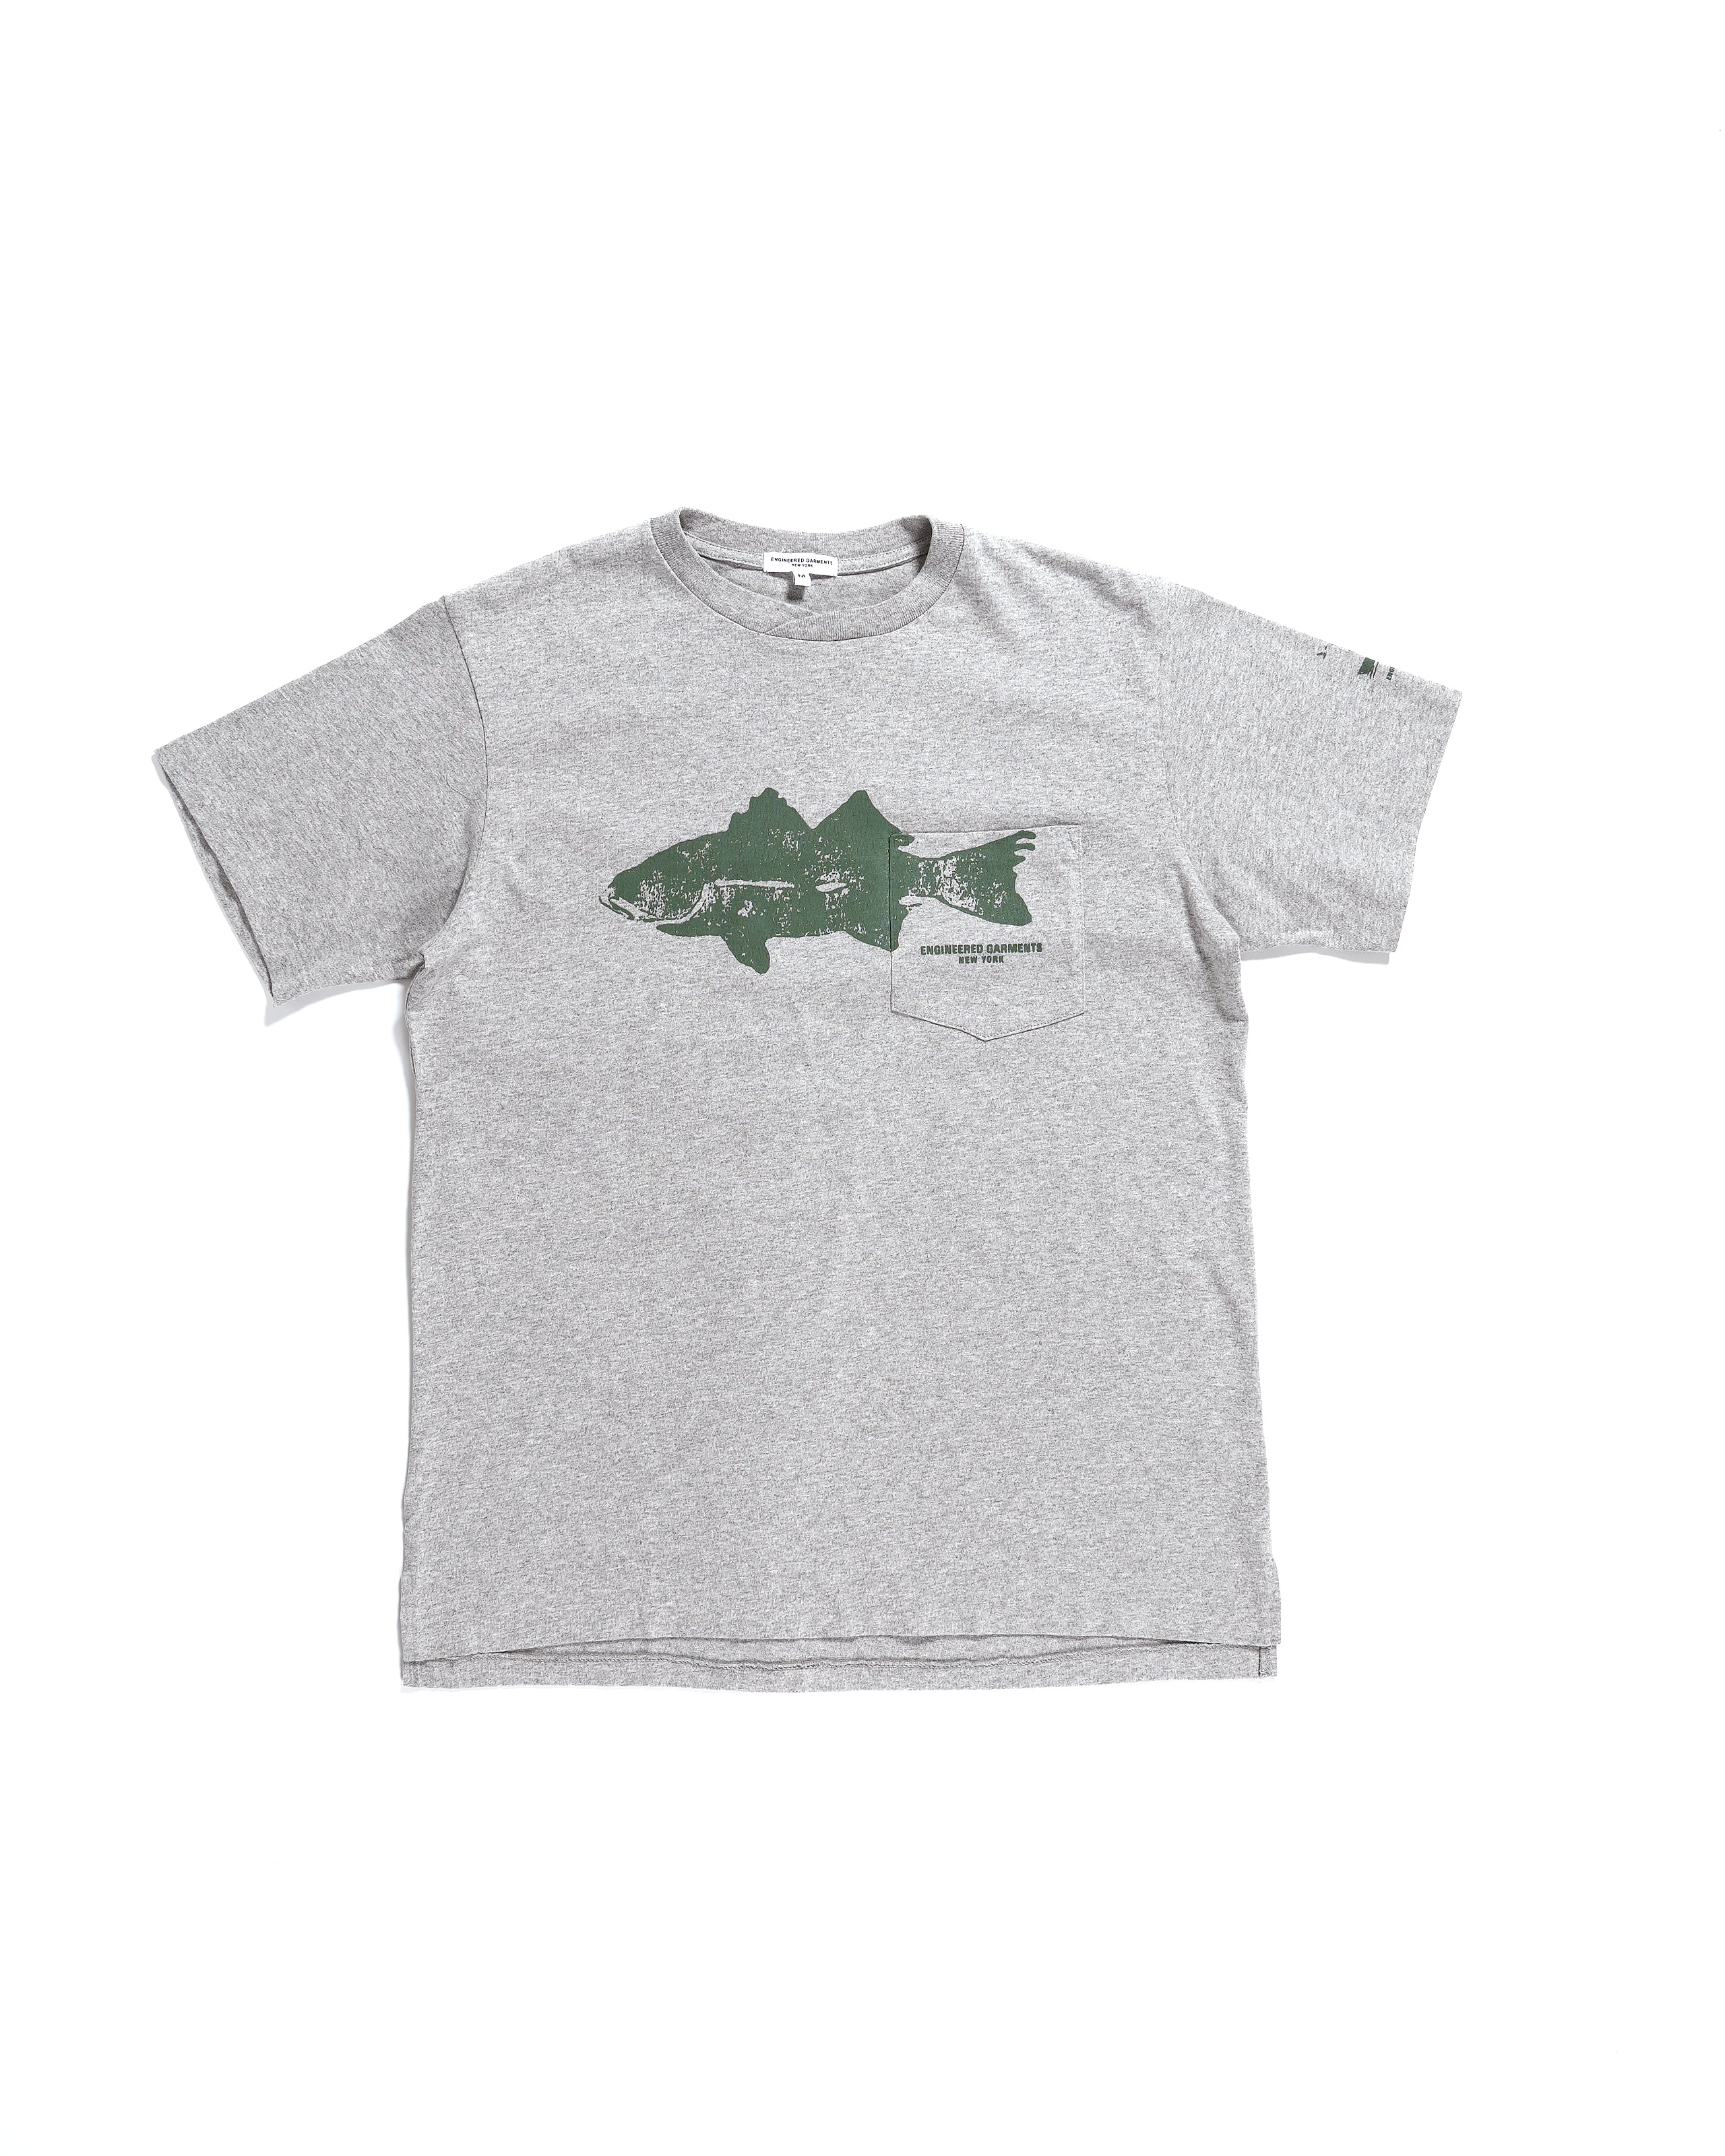 Printed Cross Crew Neck Pocket T-Shirt - Grey / Fish